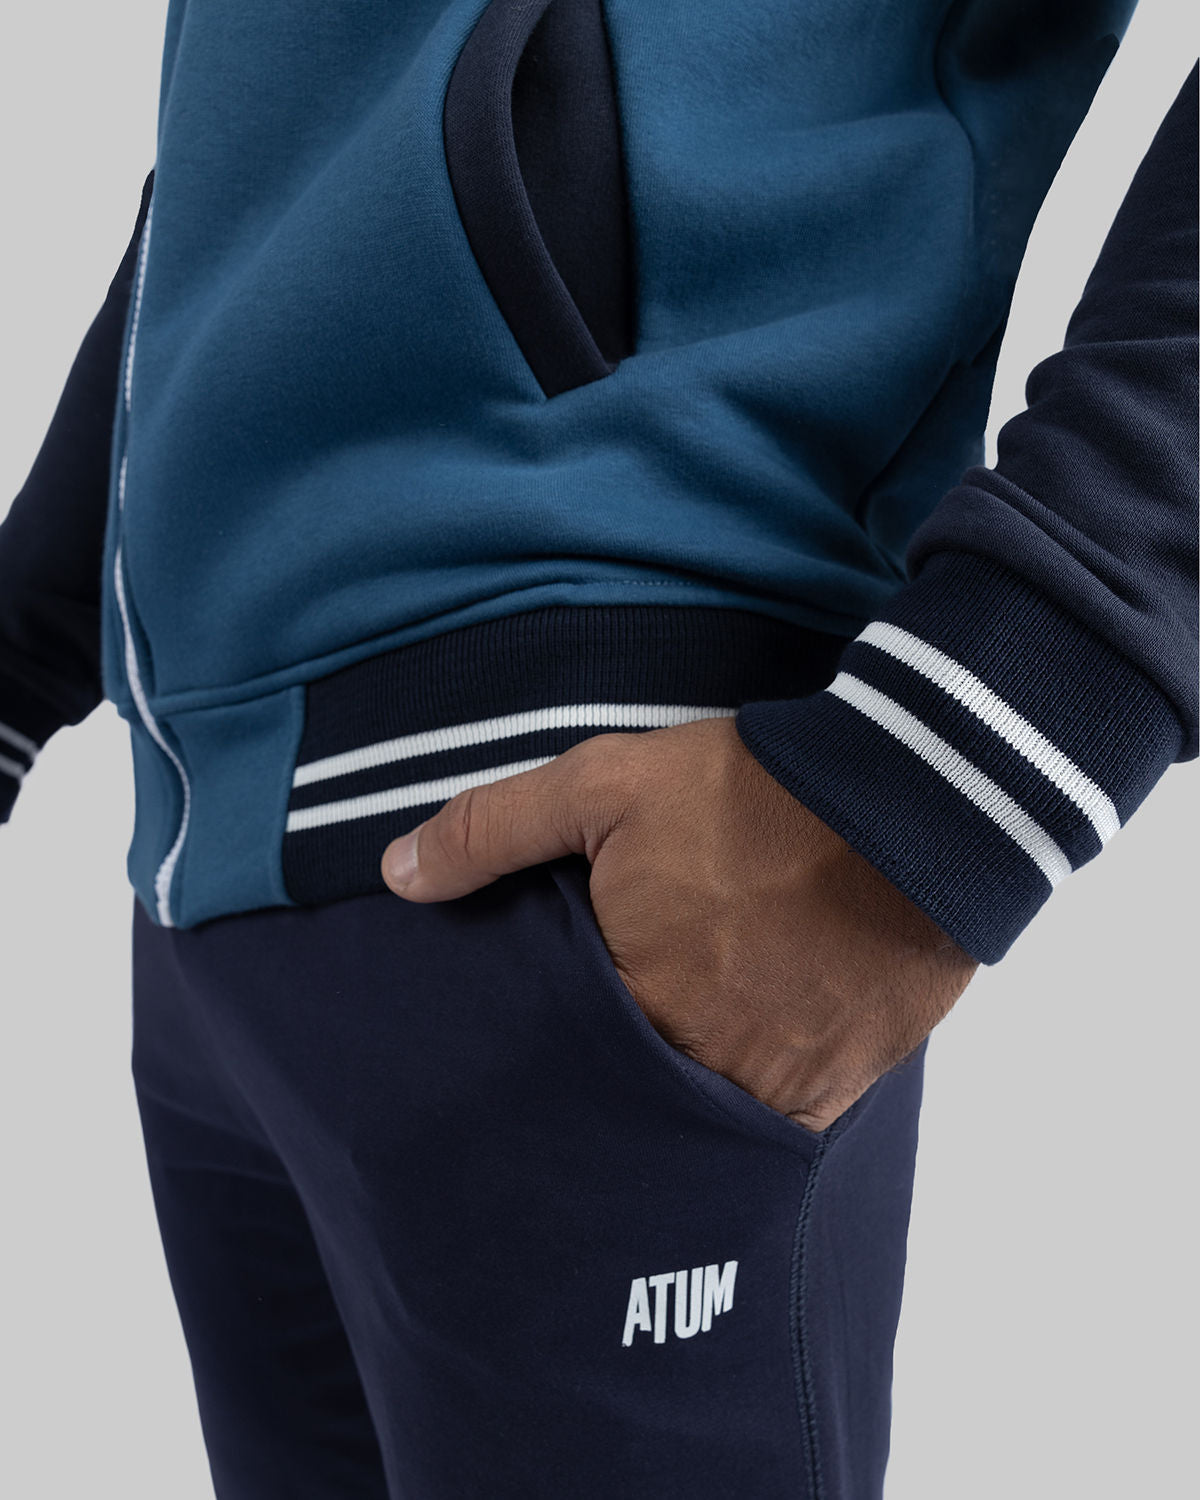 Atum Men's Varsity Jacket